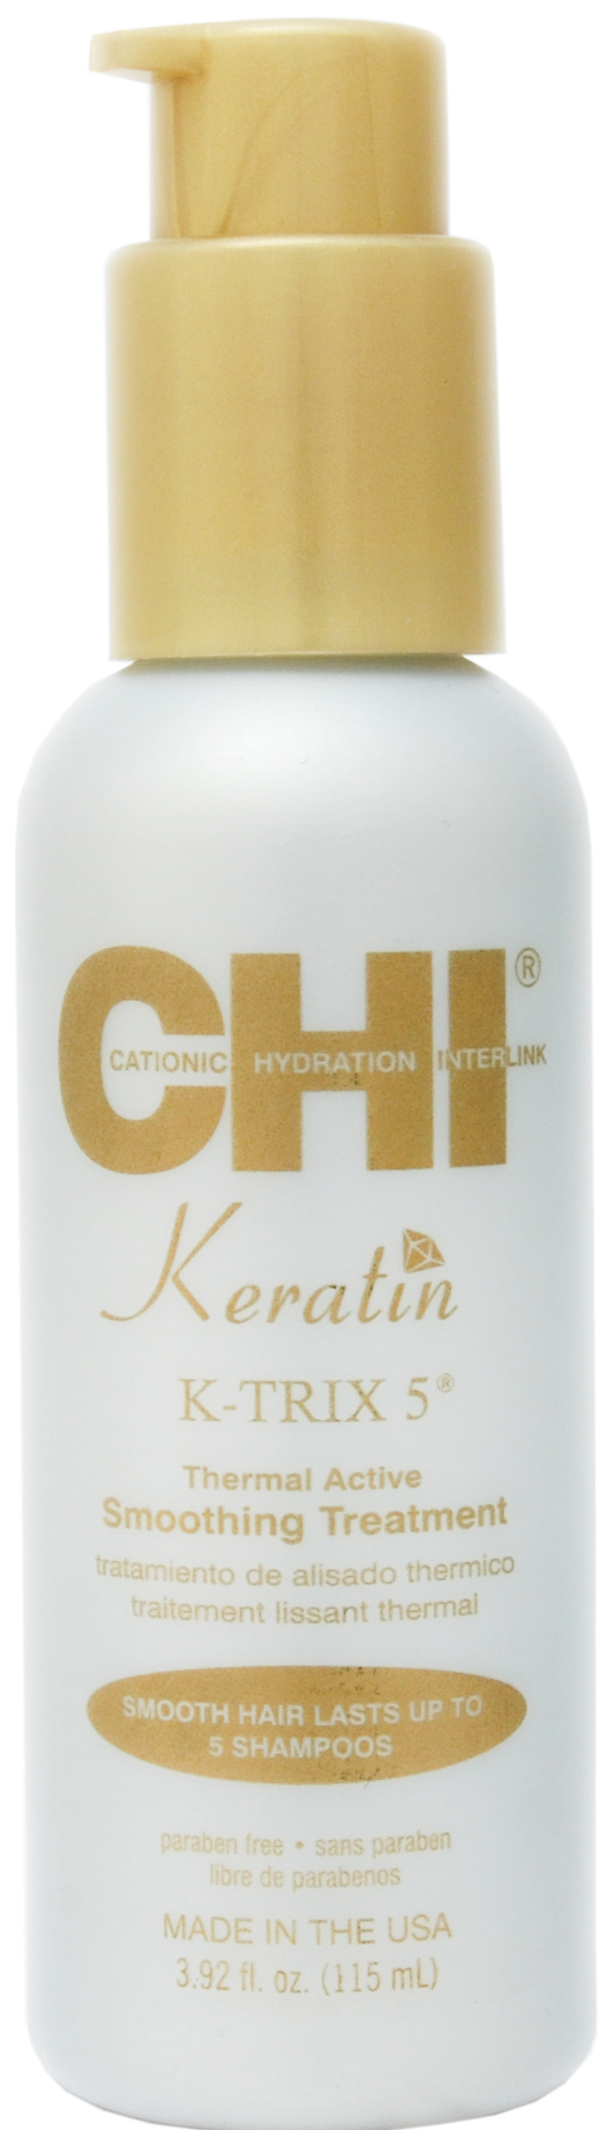 Эмульсия для волос CHI Keratin K-TRIX 5 Thermal Active Smoothing разглаживающая, 115 мл разглаживающая эмульсия для волос с кератином keratin k trix 5 thermal active smoothing treatment